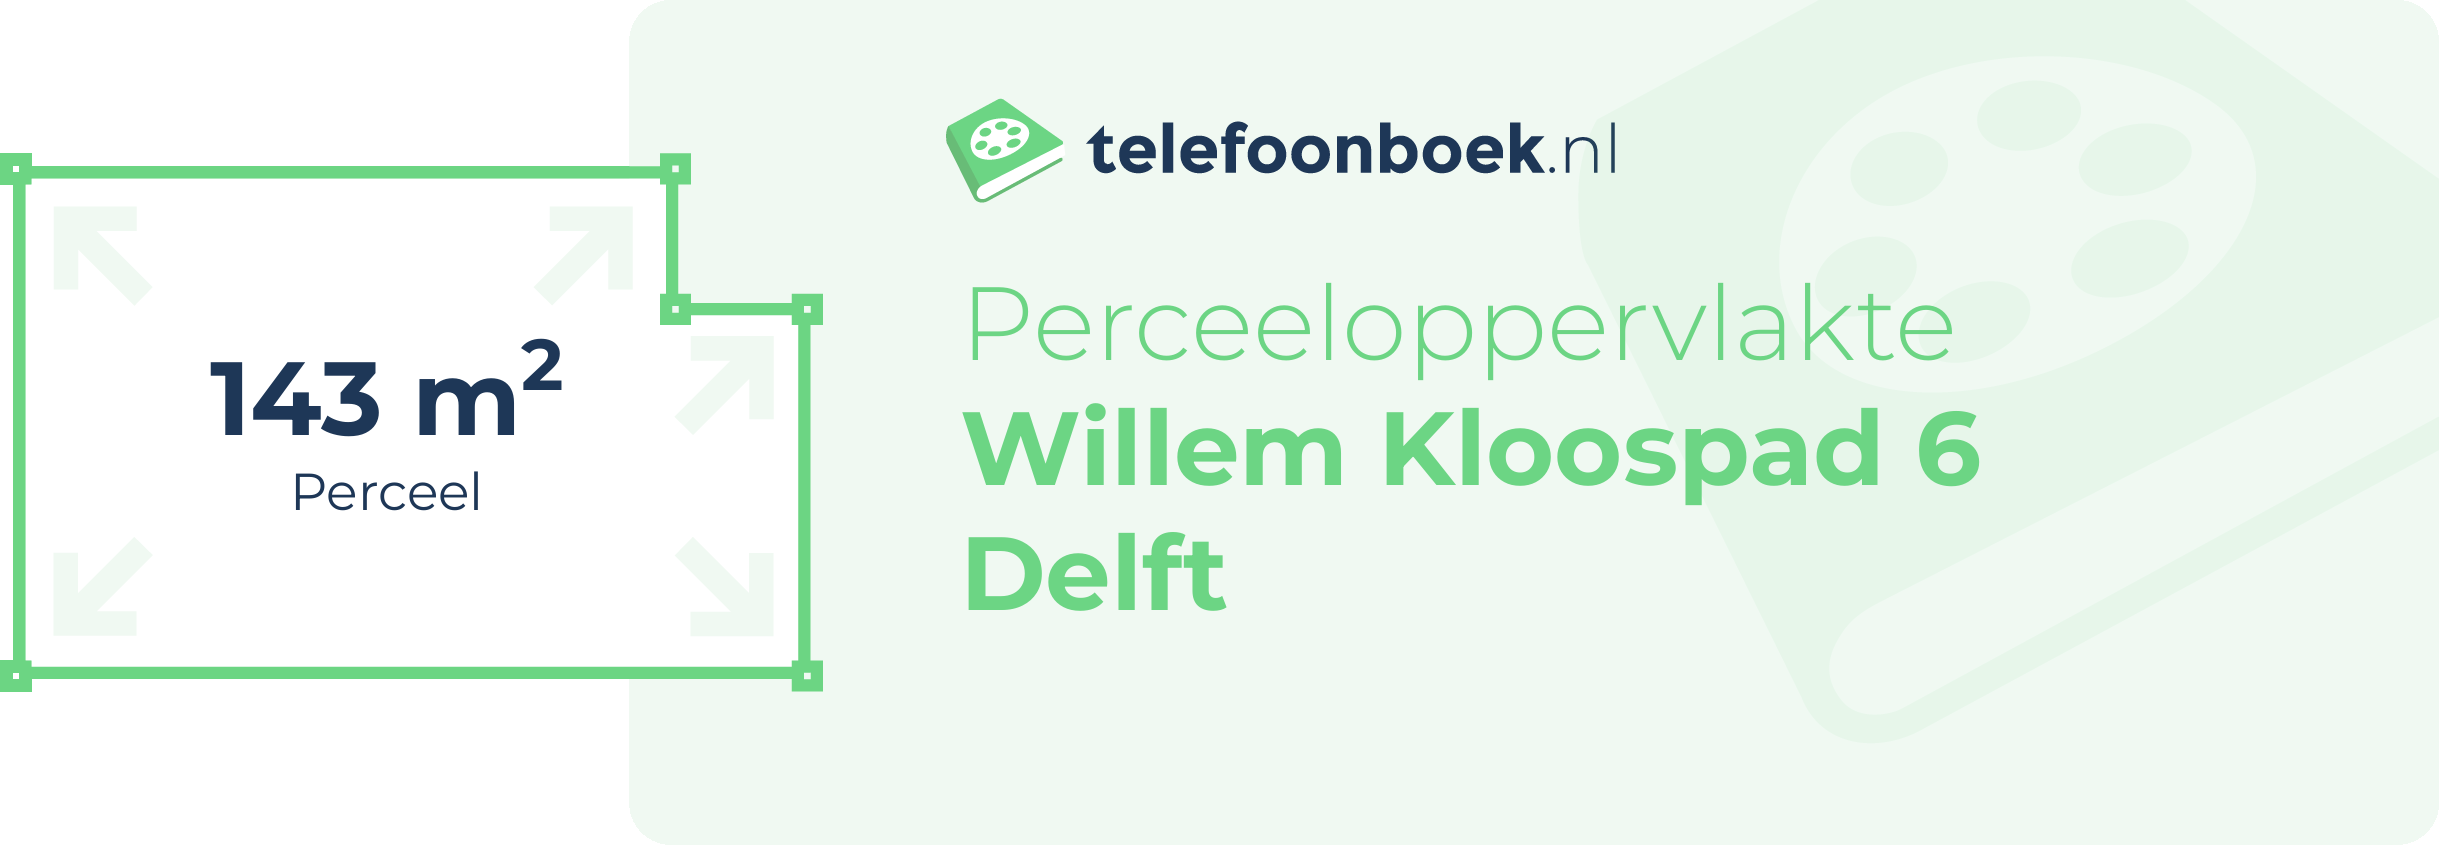 Perceeloppervlakte Willem Kloospad 6 Delft